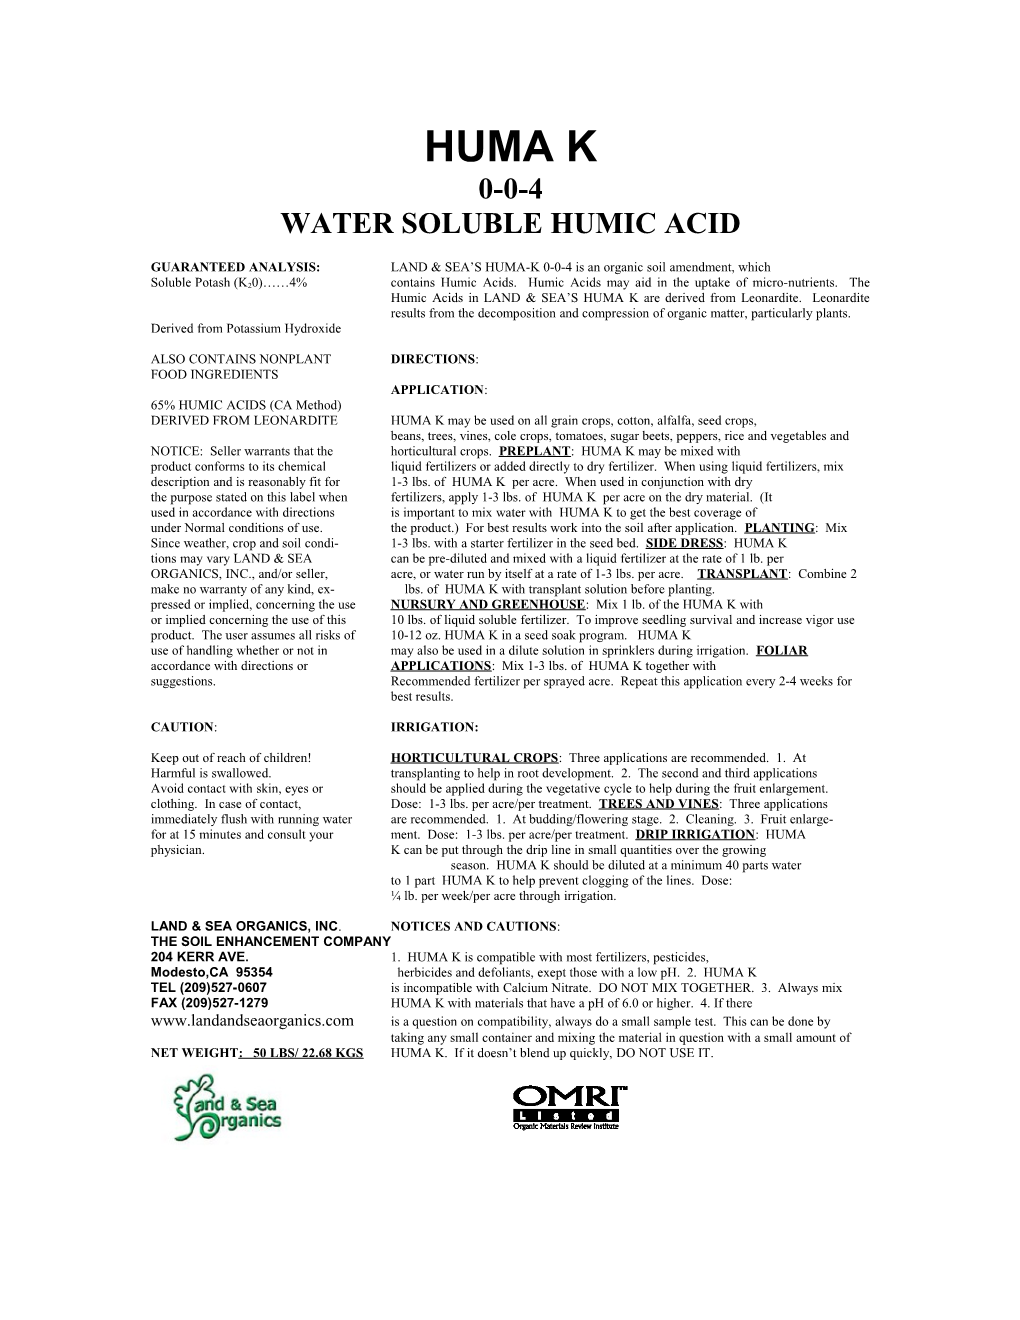 Water Soluble Humic Acid